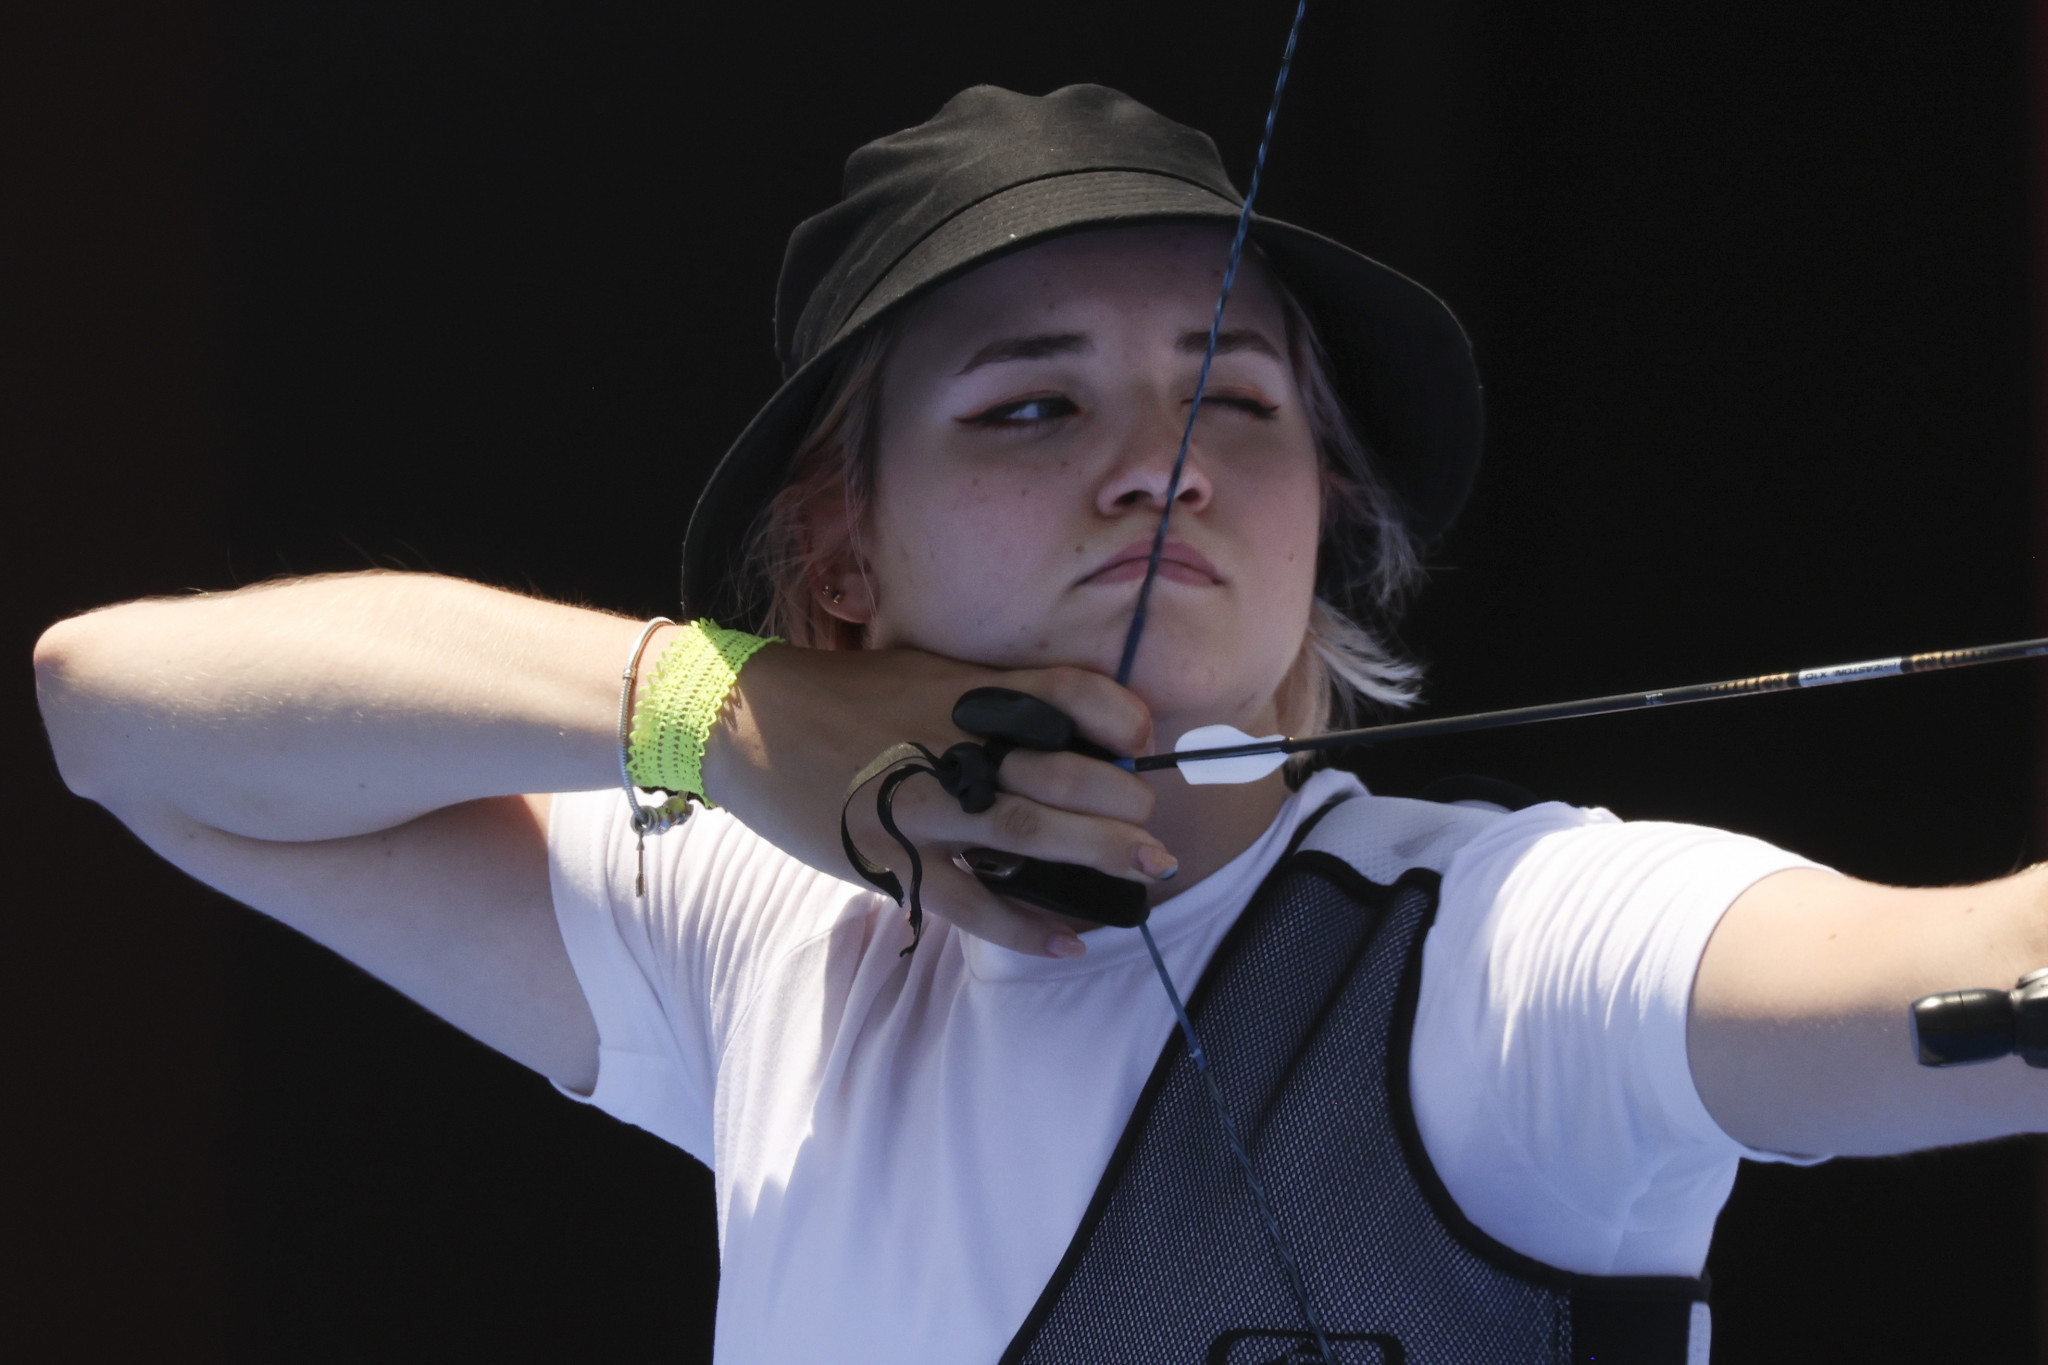 Belarusian archer Karyna Kazlouskaya, who has fled to Poland, has accused the IOC of having 